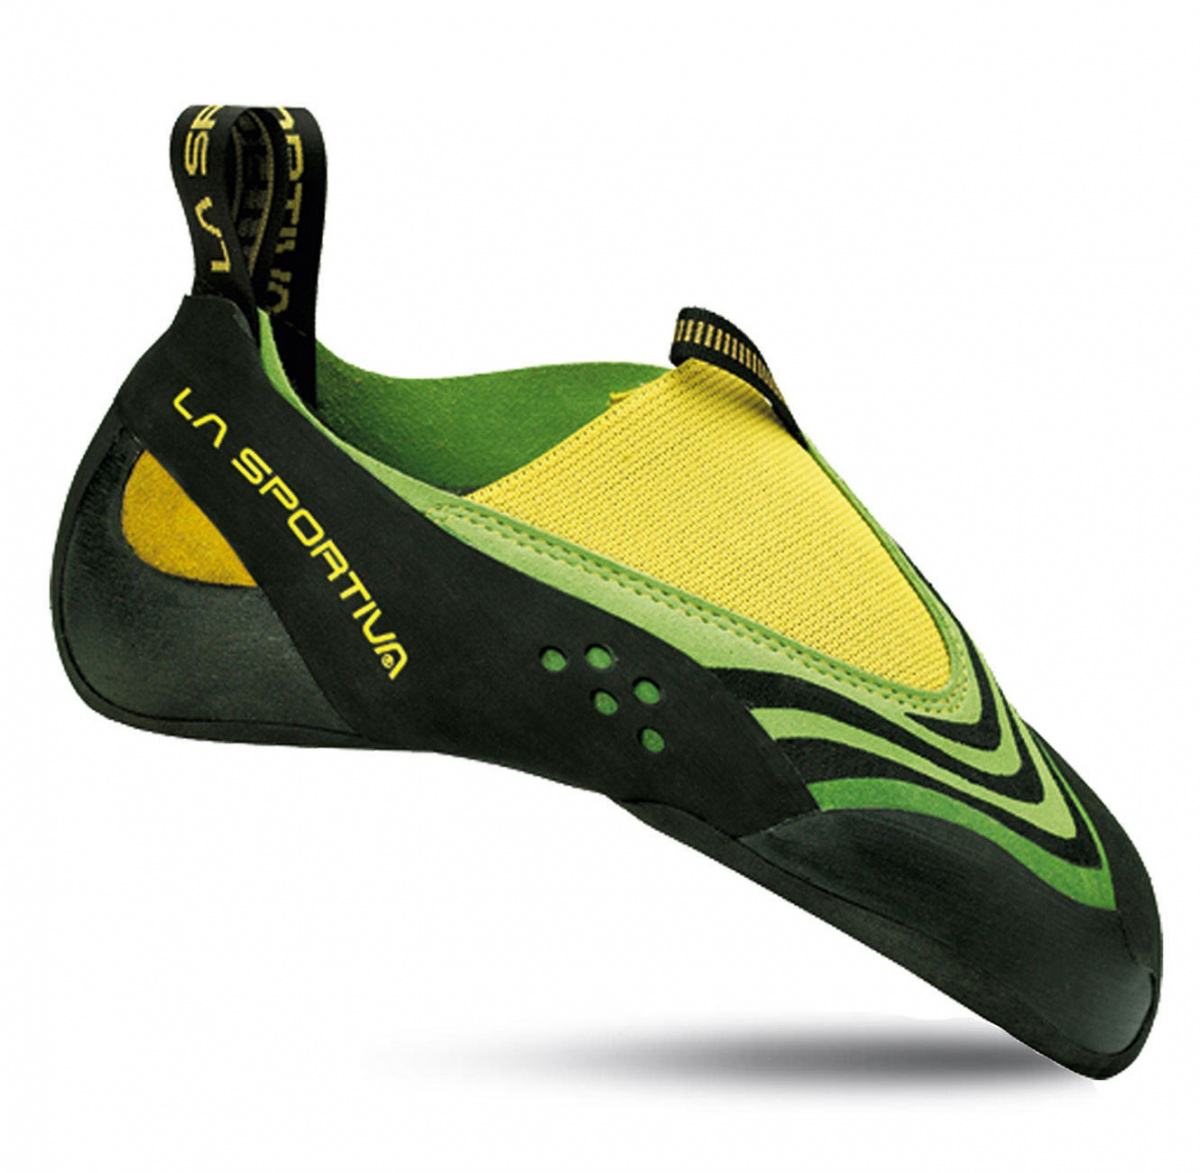 Lezečky La Sportiva Speedster green/yellow 41,5 EU